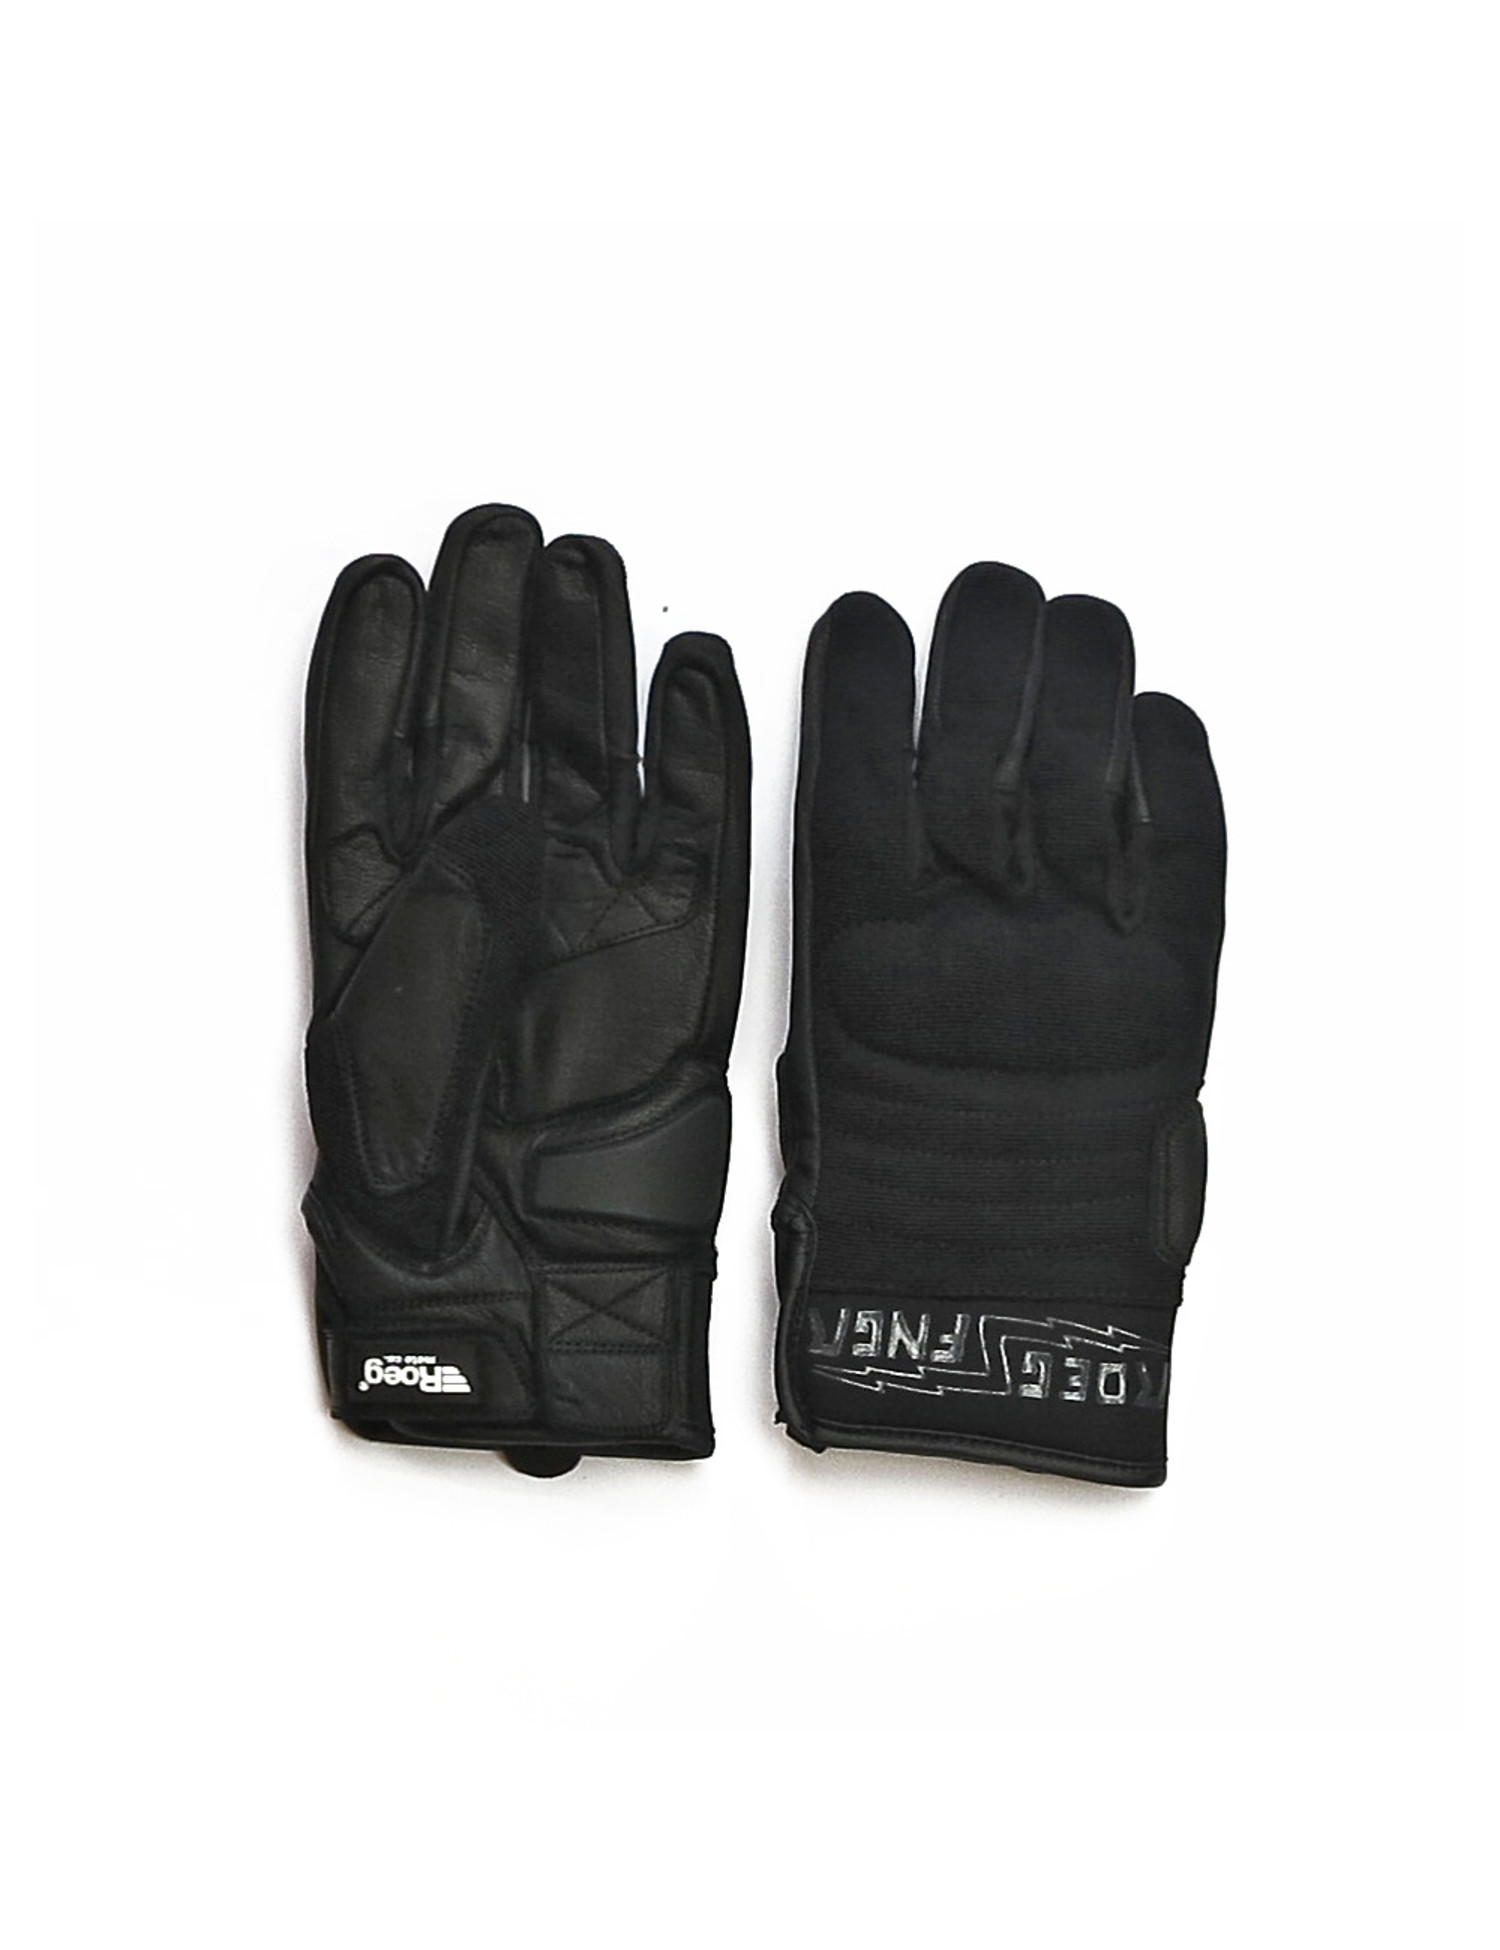 FNGR Textile glove Black